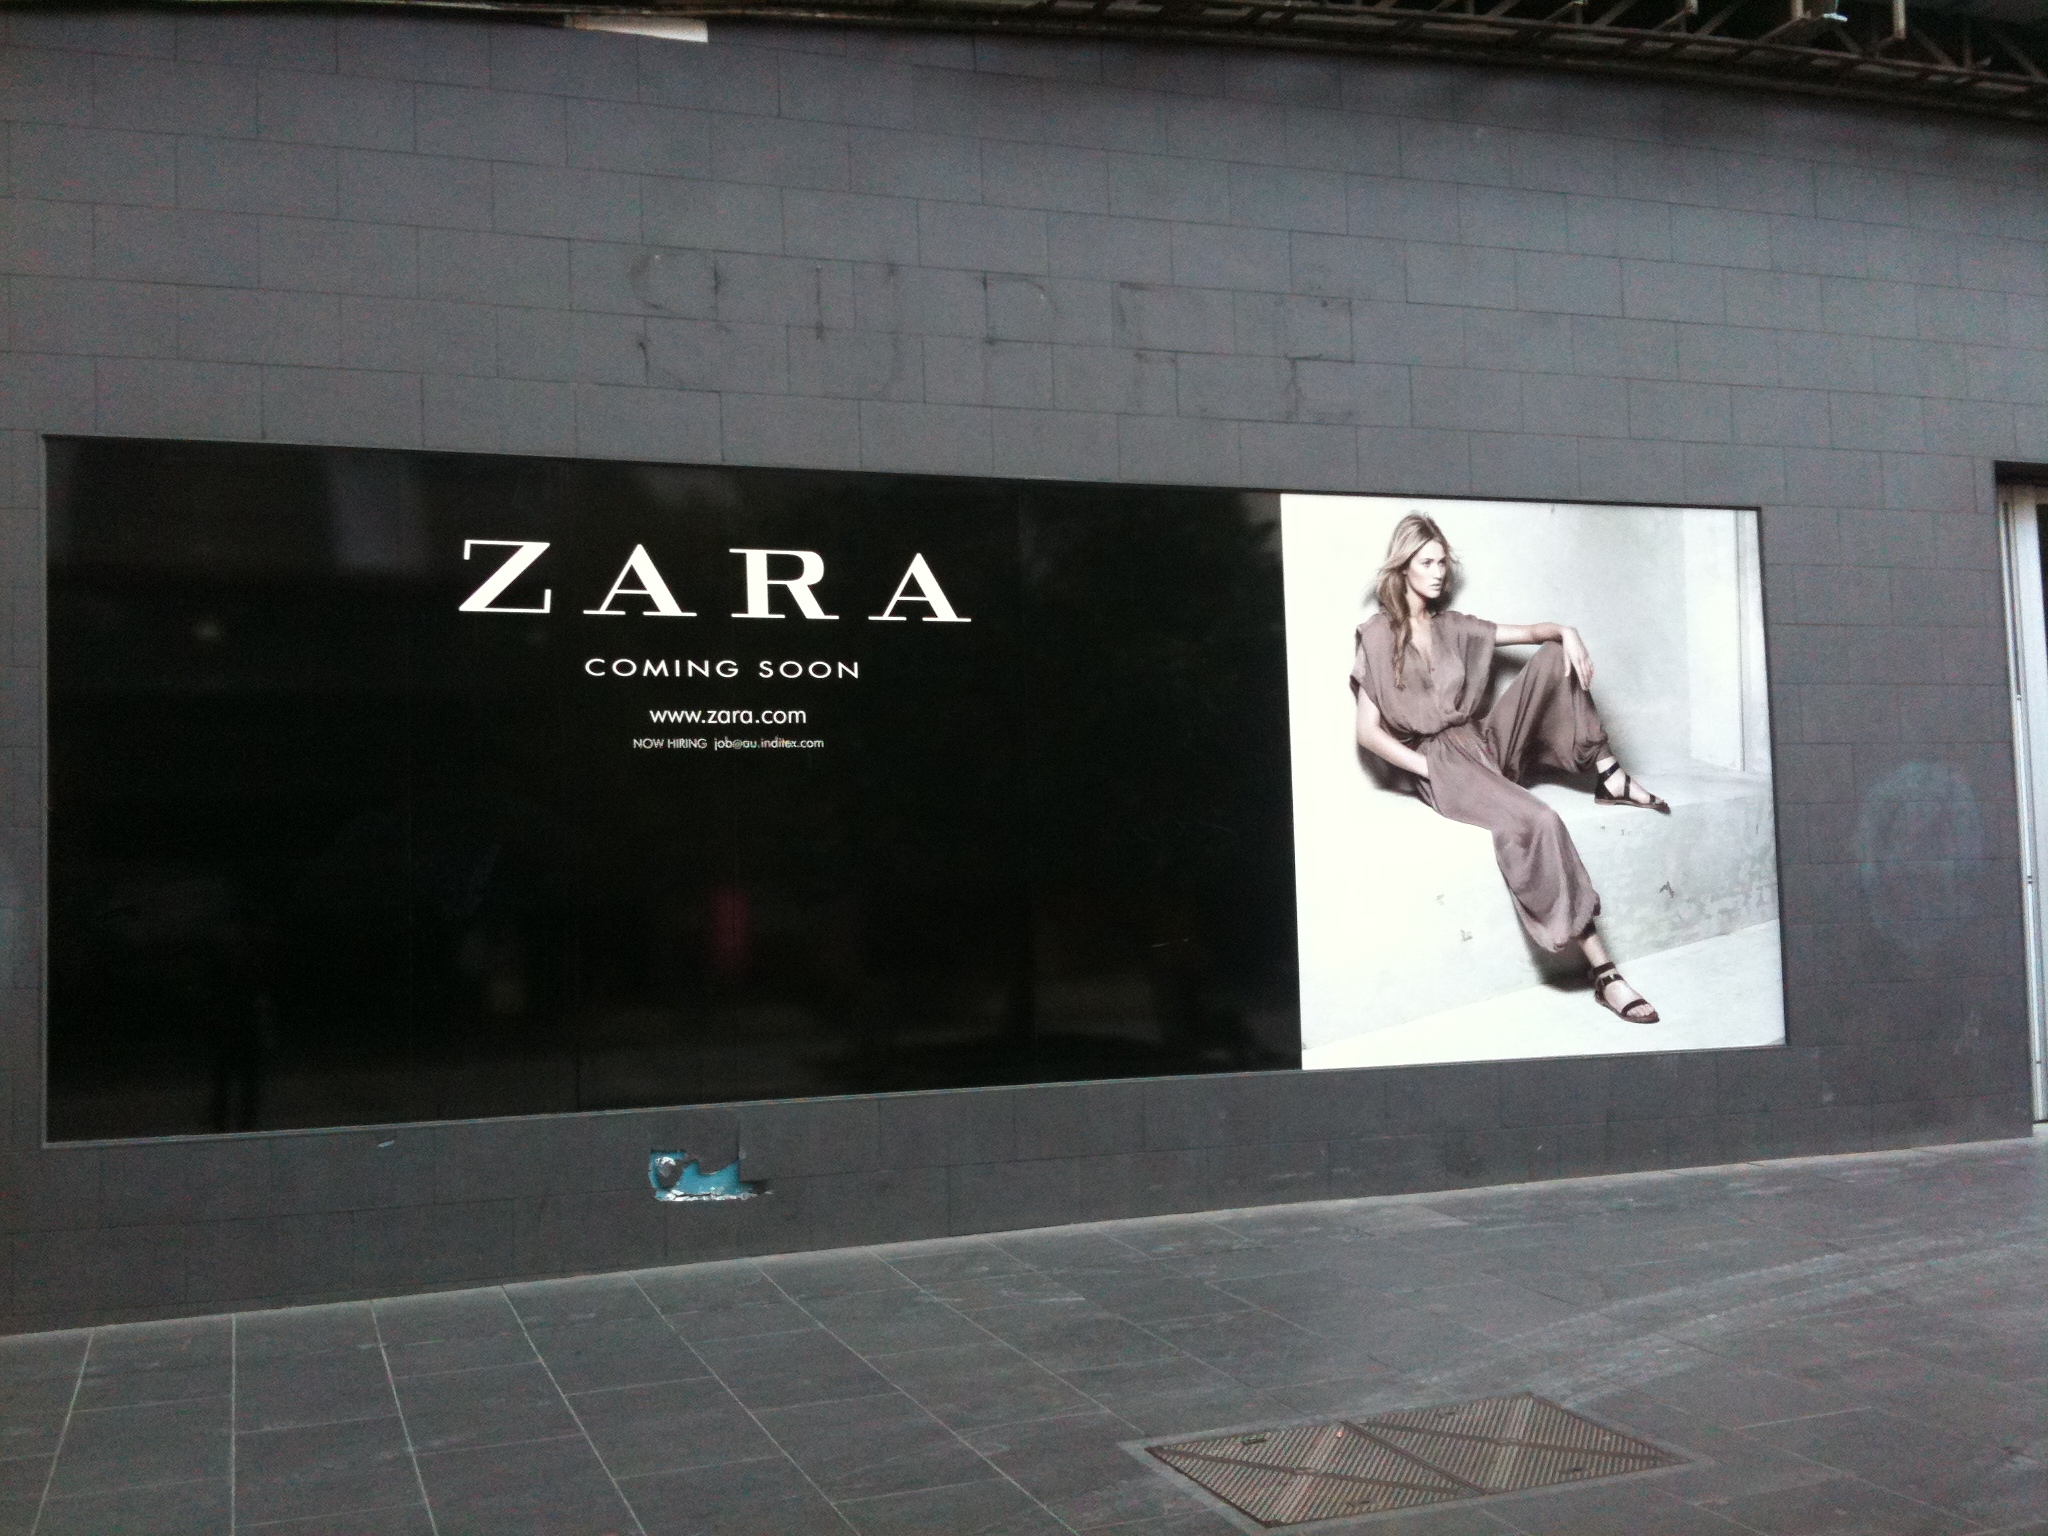 International Business: Zara International Business Strategy